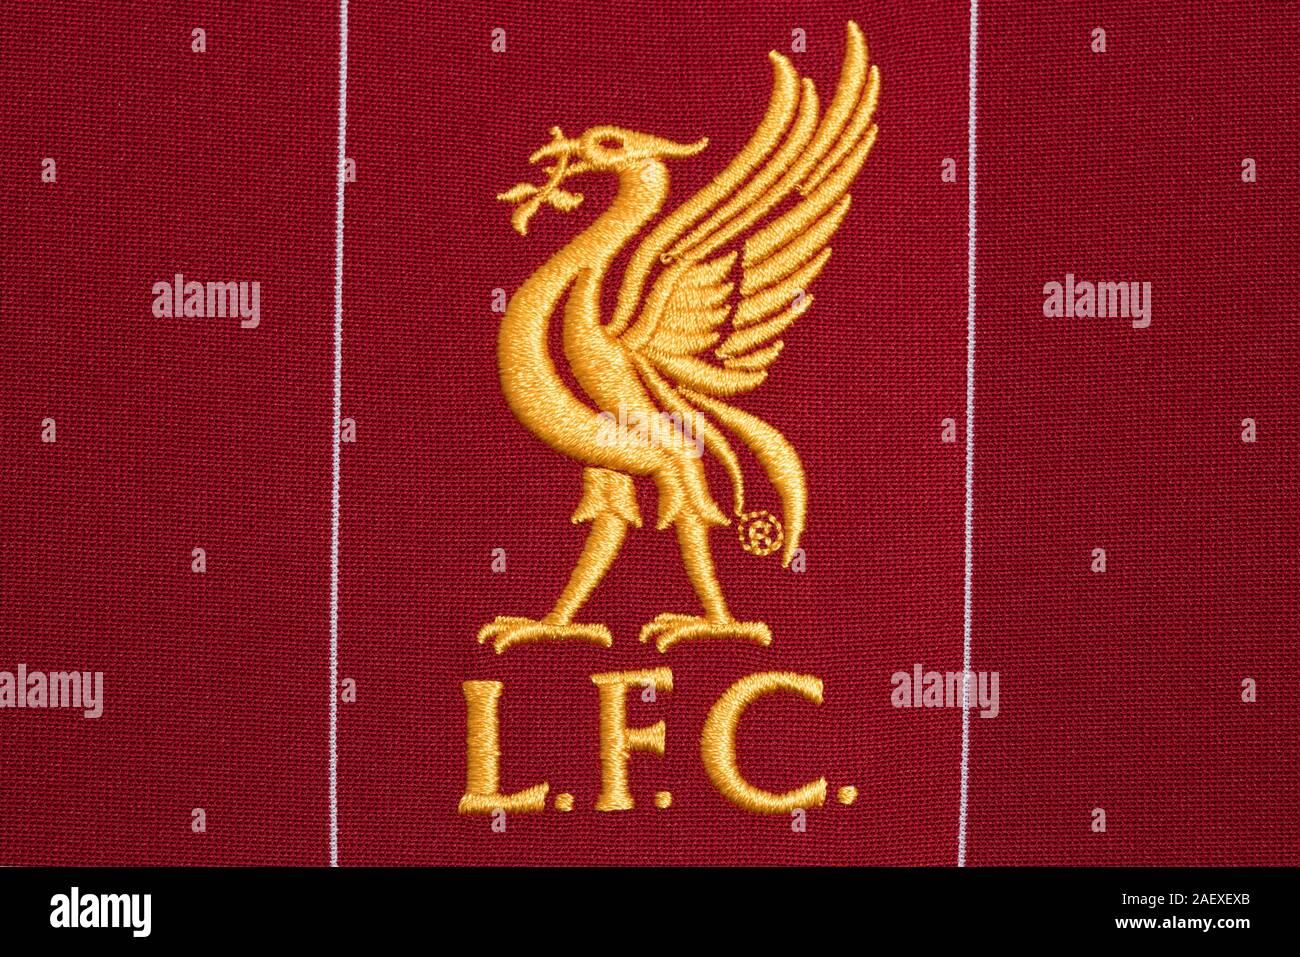 Chiusura del Liverpool FC 2019/20 kit. Foto Stock